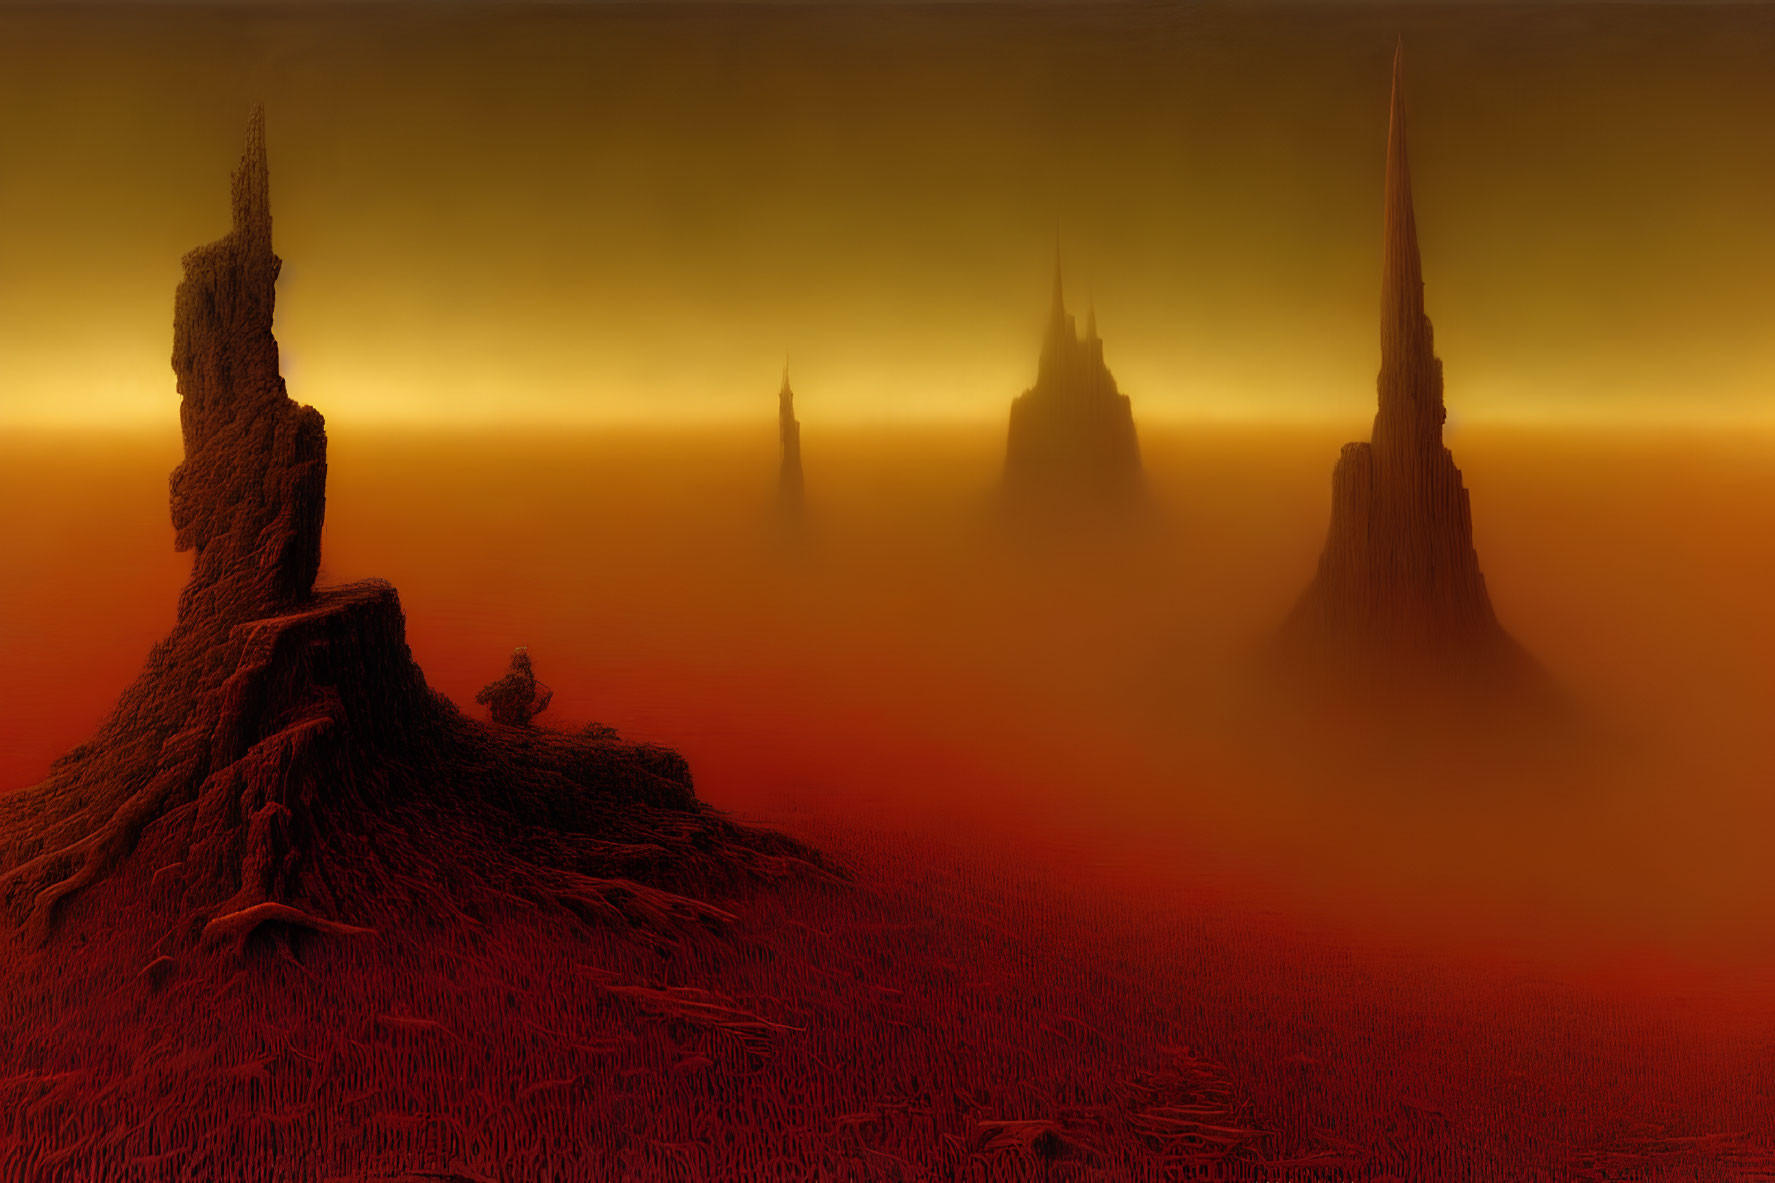 Misty surreal landscape with crimson vegetation and towering spires